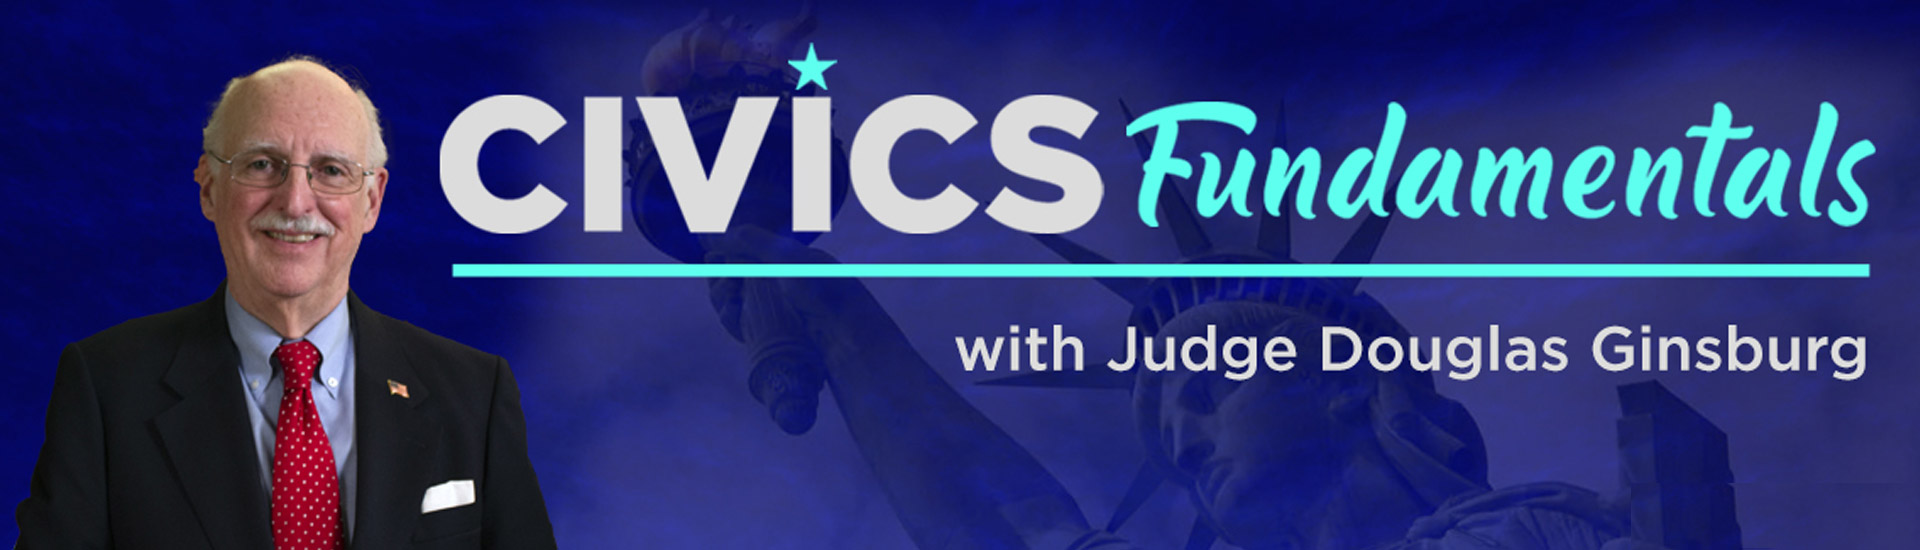 Civics Fundamentals With Judge Douglas Ginsburg